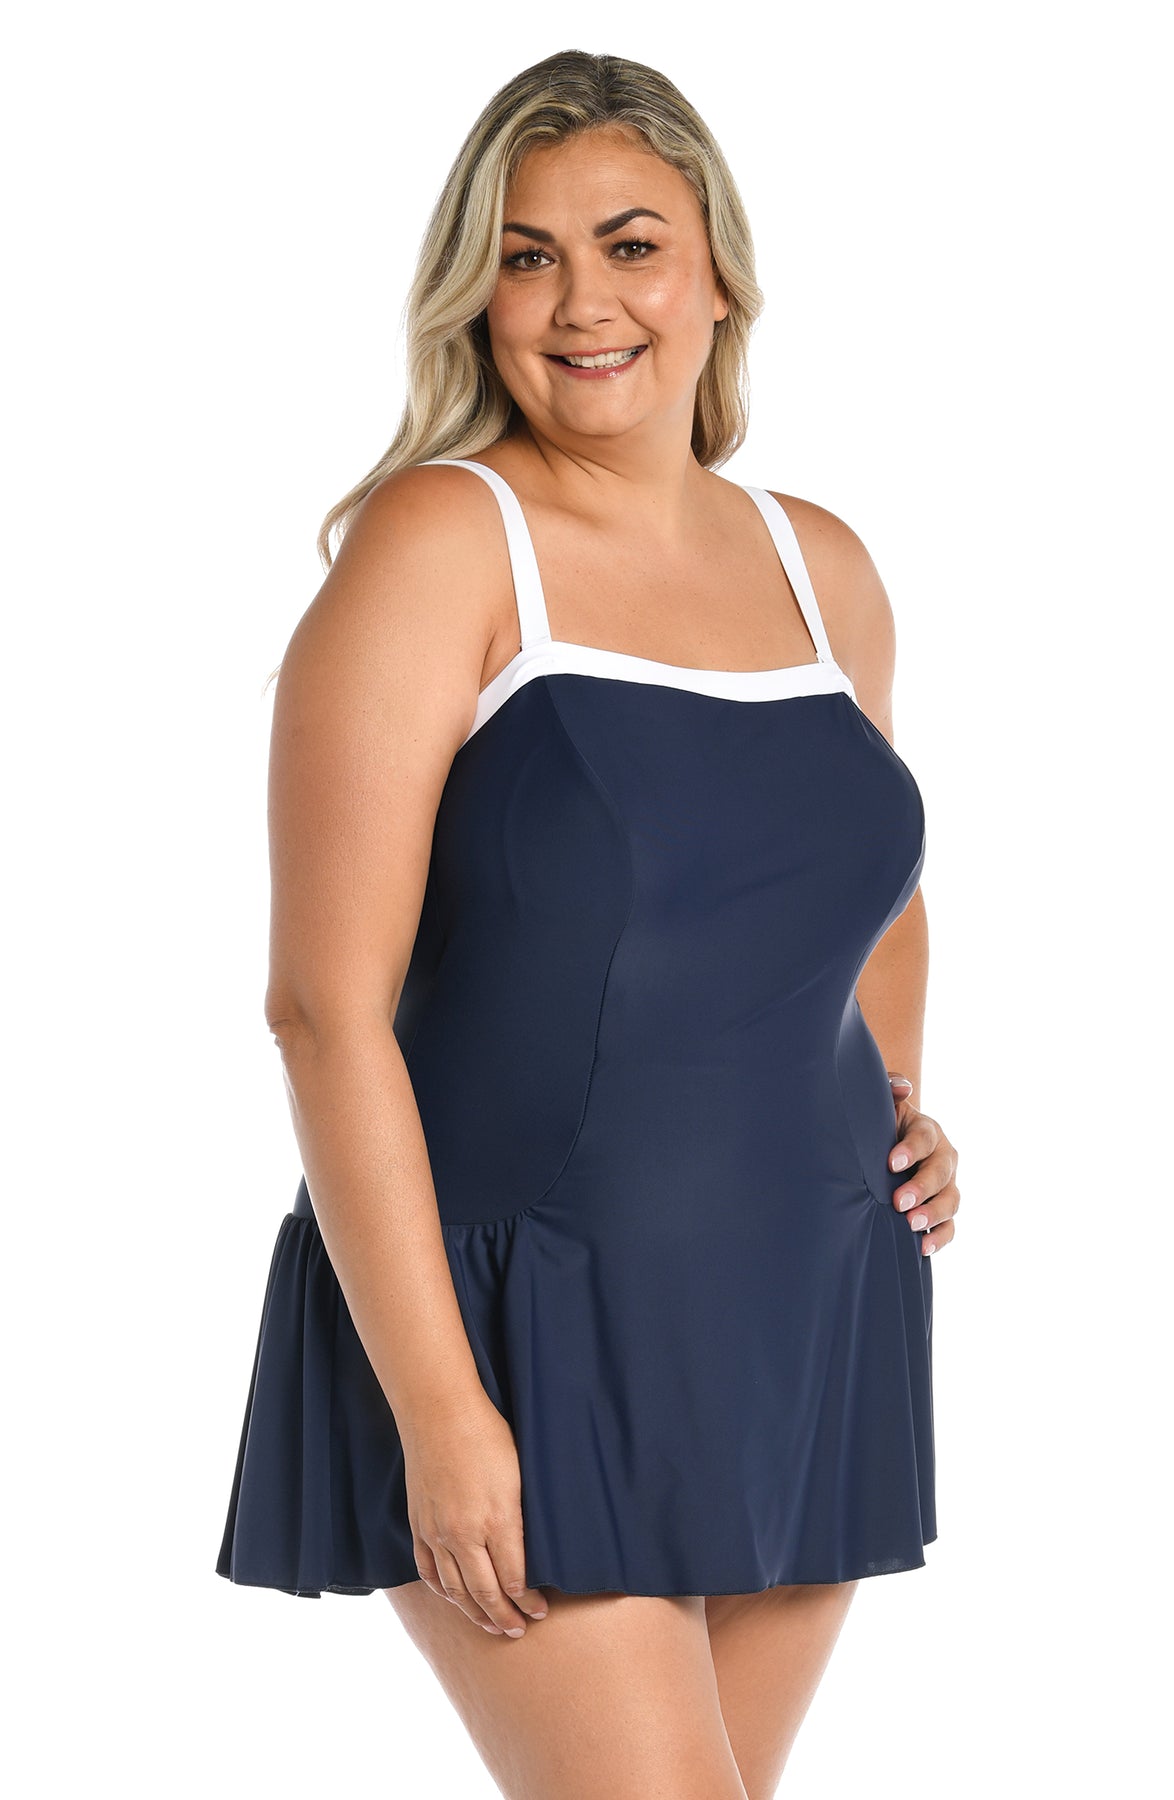 Women Plus Size Skirted Swimsuit One-Piece Swimwear with Flared Skirt  Bikini Bathing Suits - L / Navy Blue